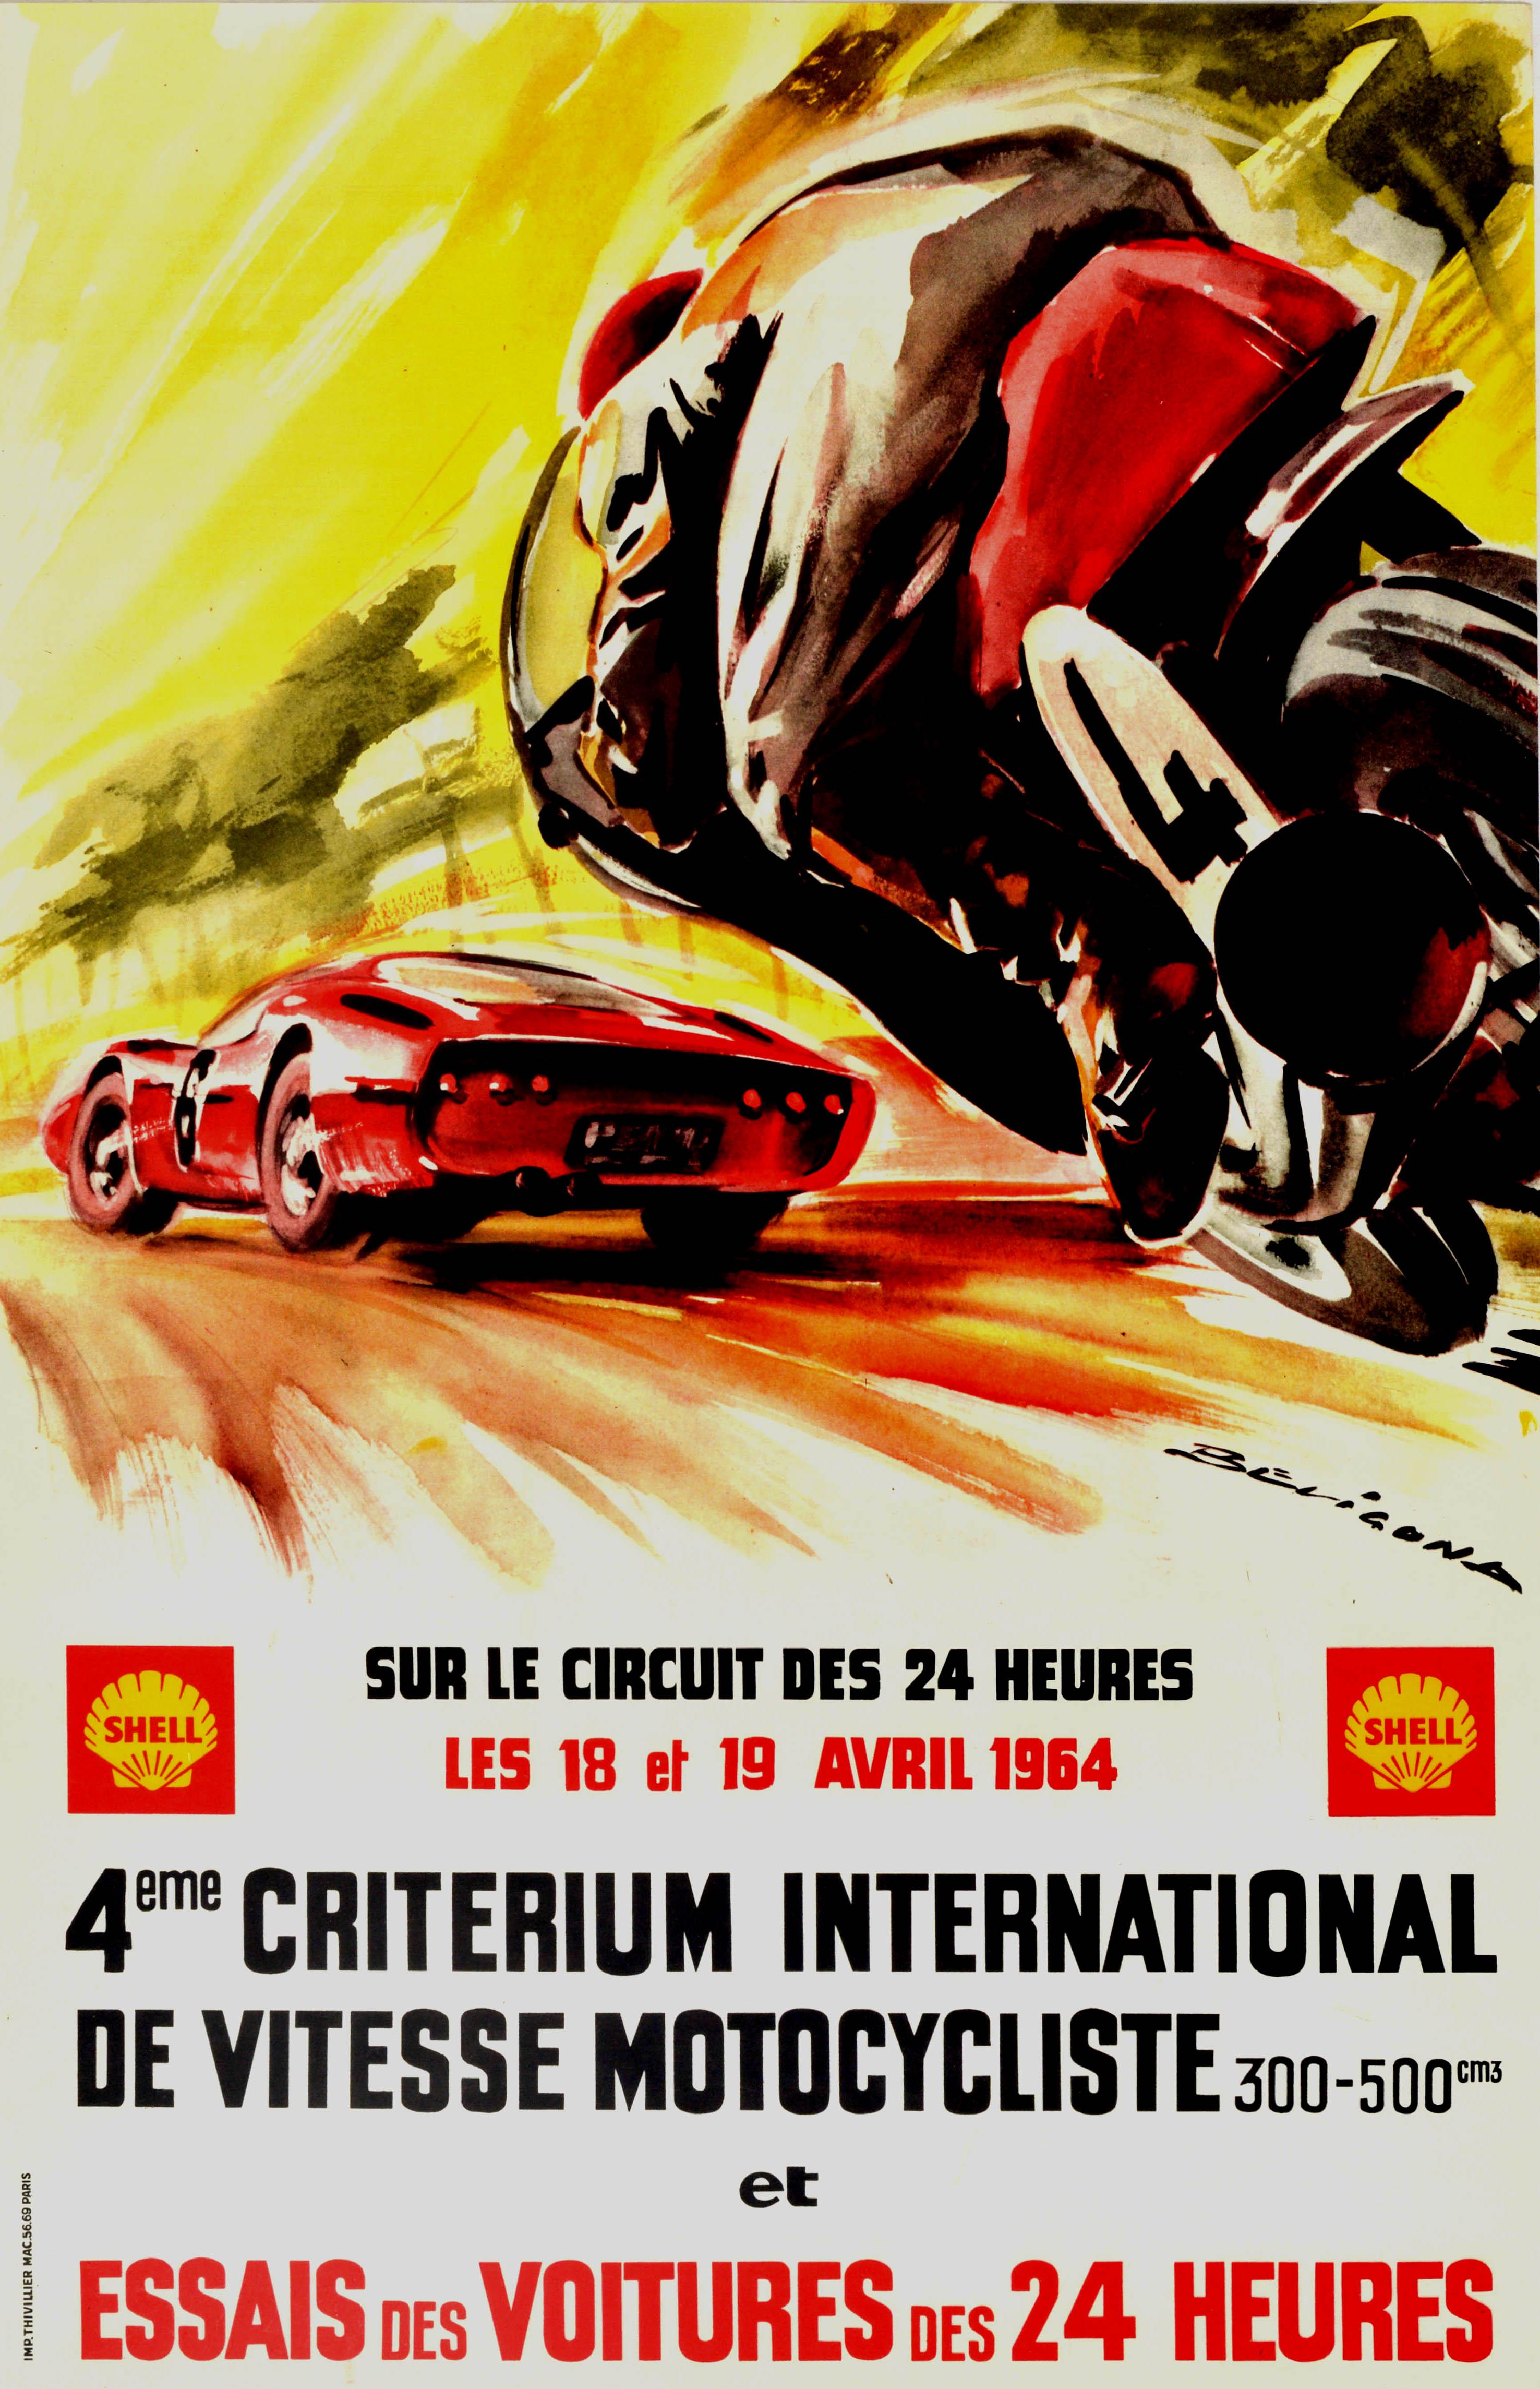 Michel Beligond Print - Original Vintage Poster 24 Heures Du Mans Speed Racing Le Mans Motor Sport Art 